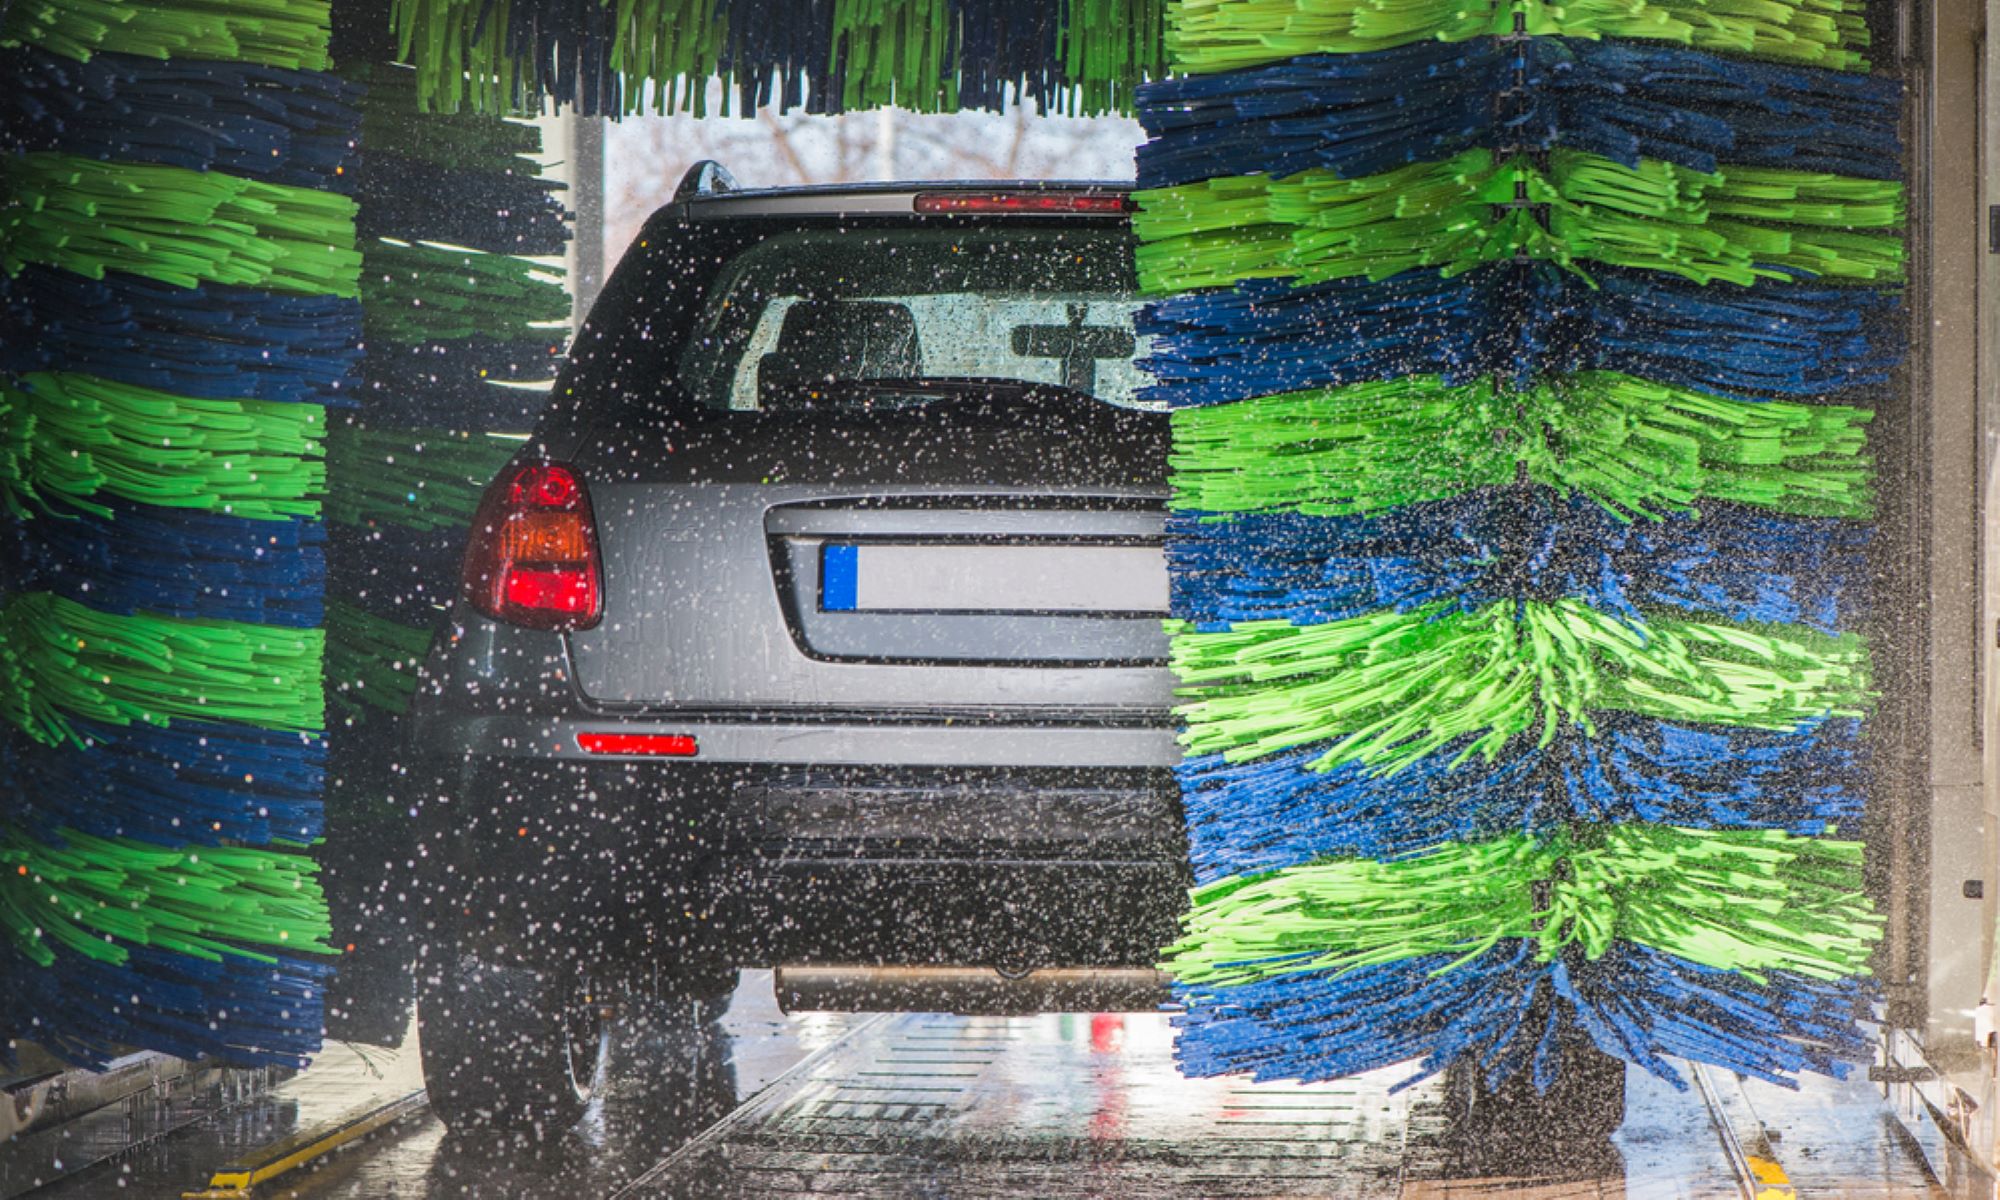 A car goes through an automated car wash